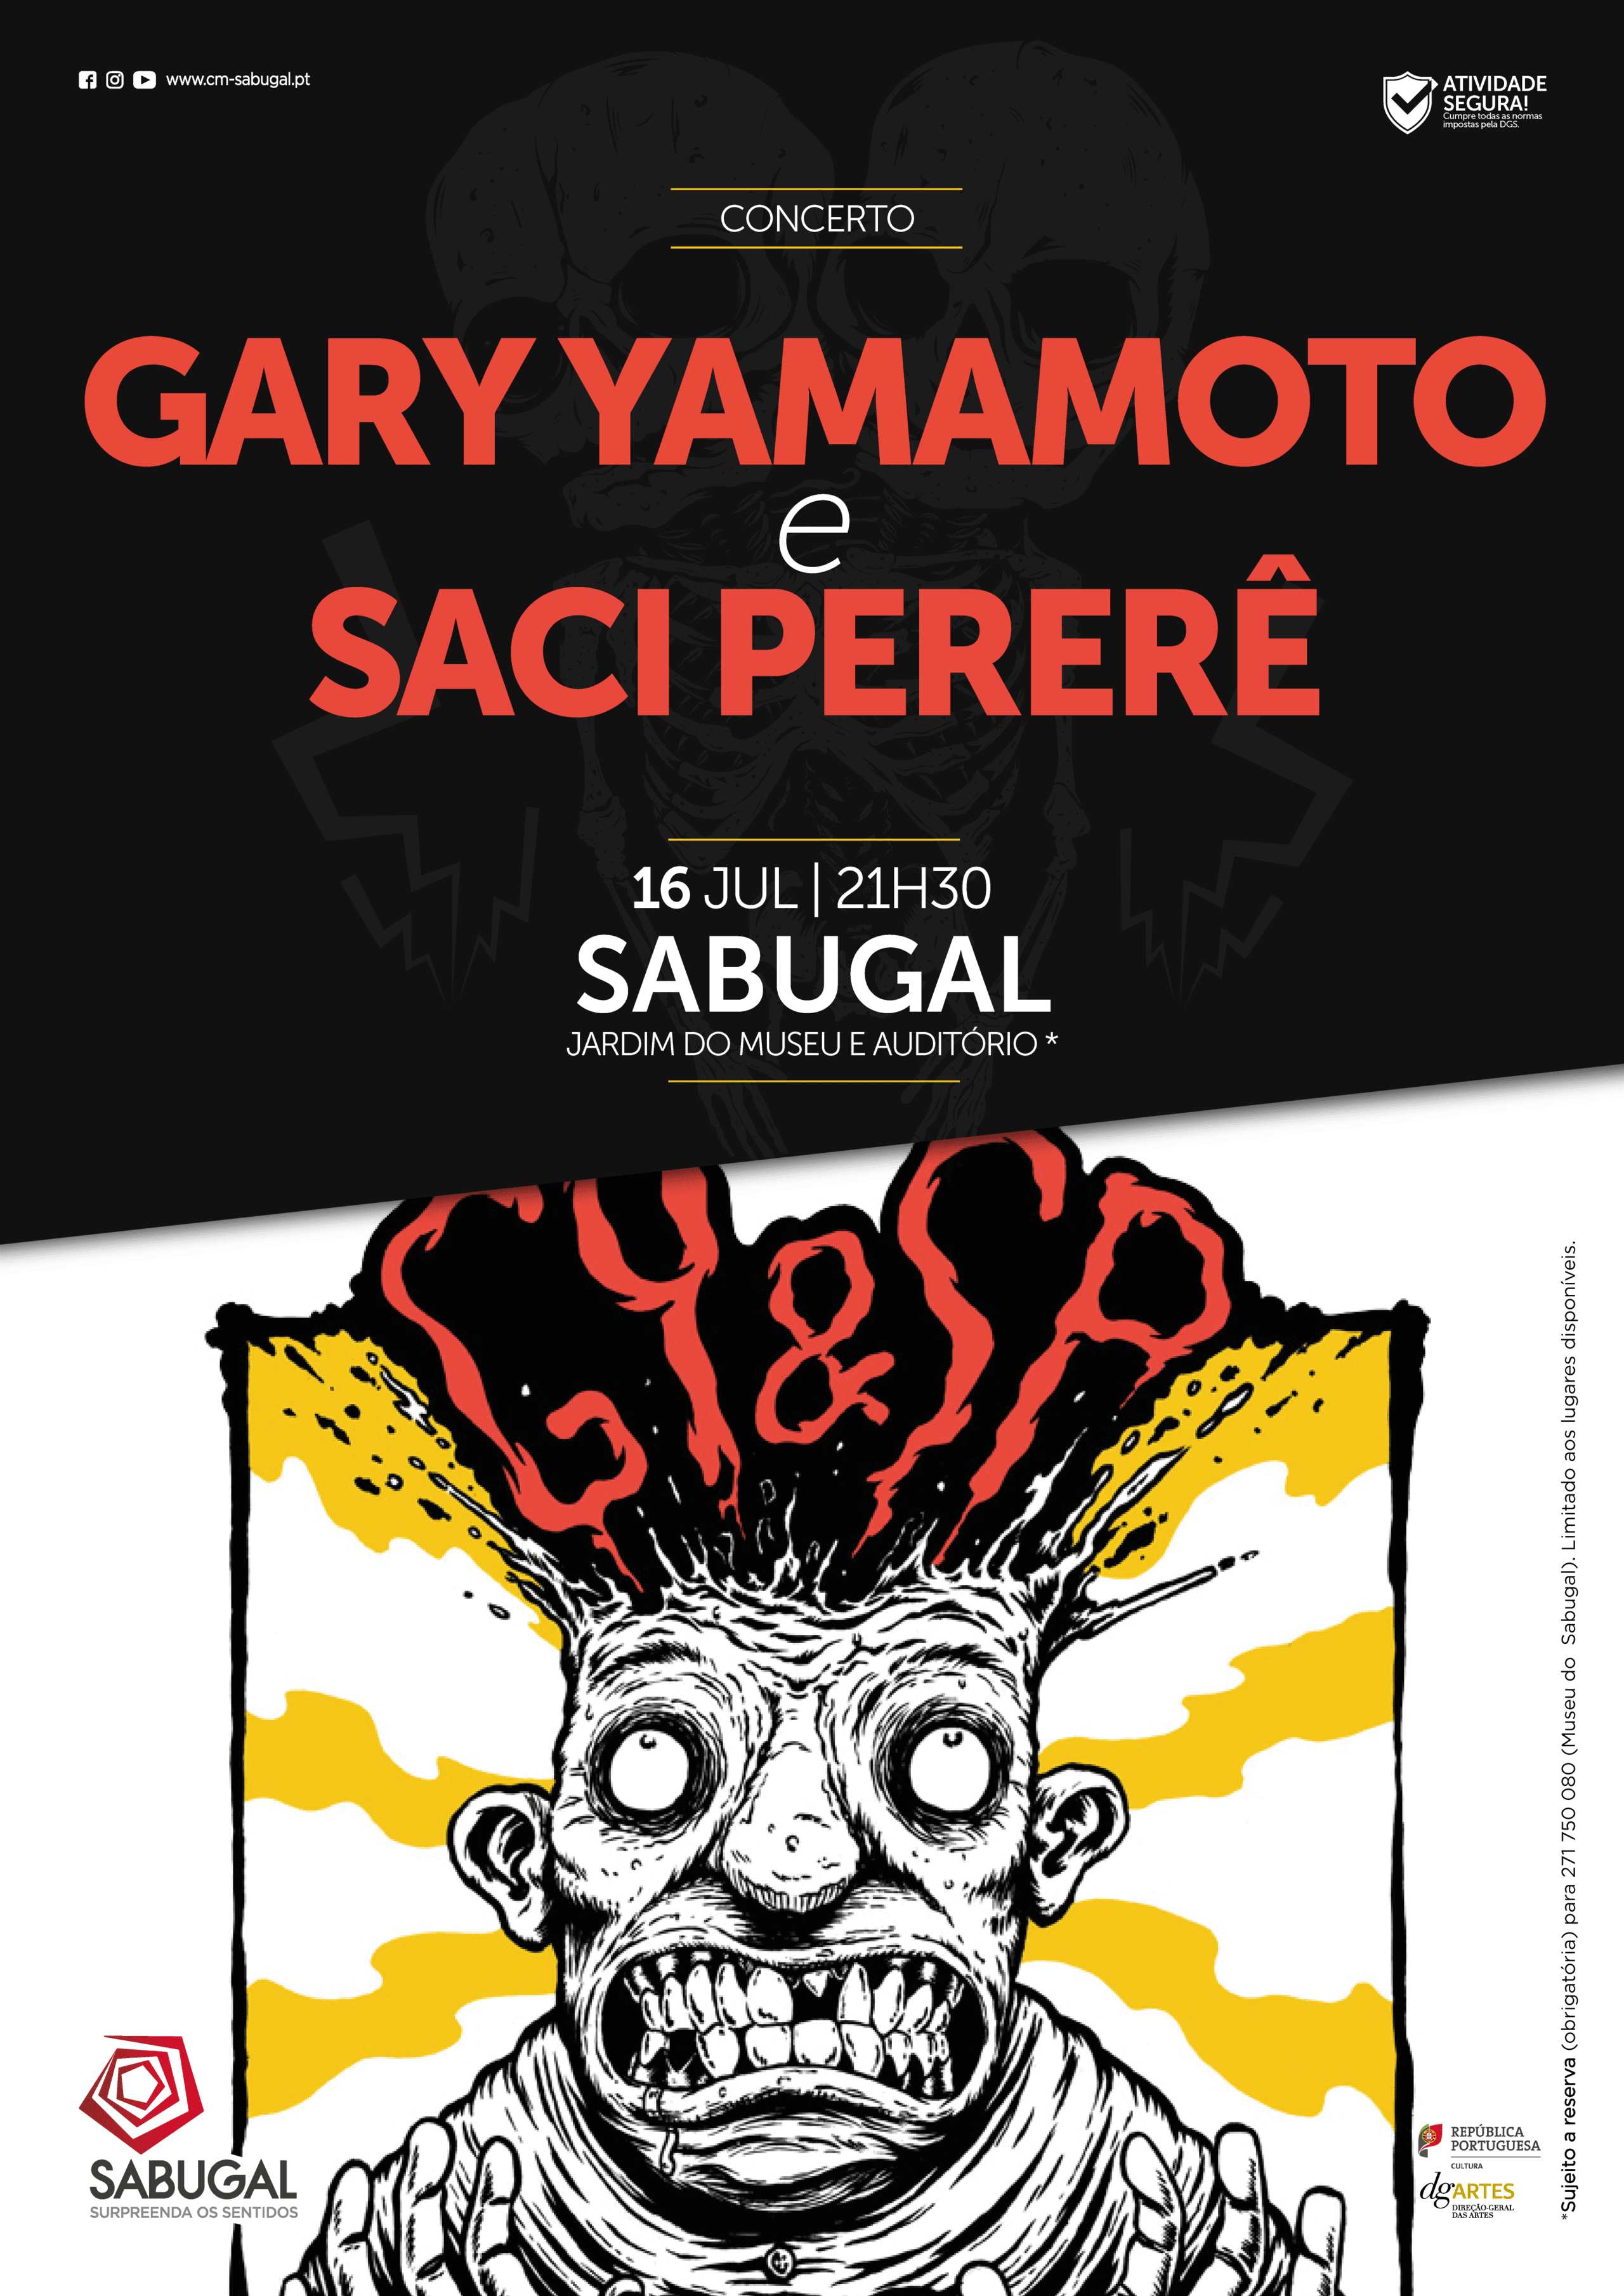 Gary Yamamoto e Saci Pererê - New Song MP3 Download & Lyrics